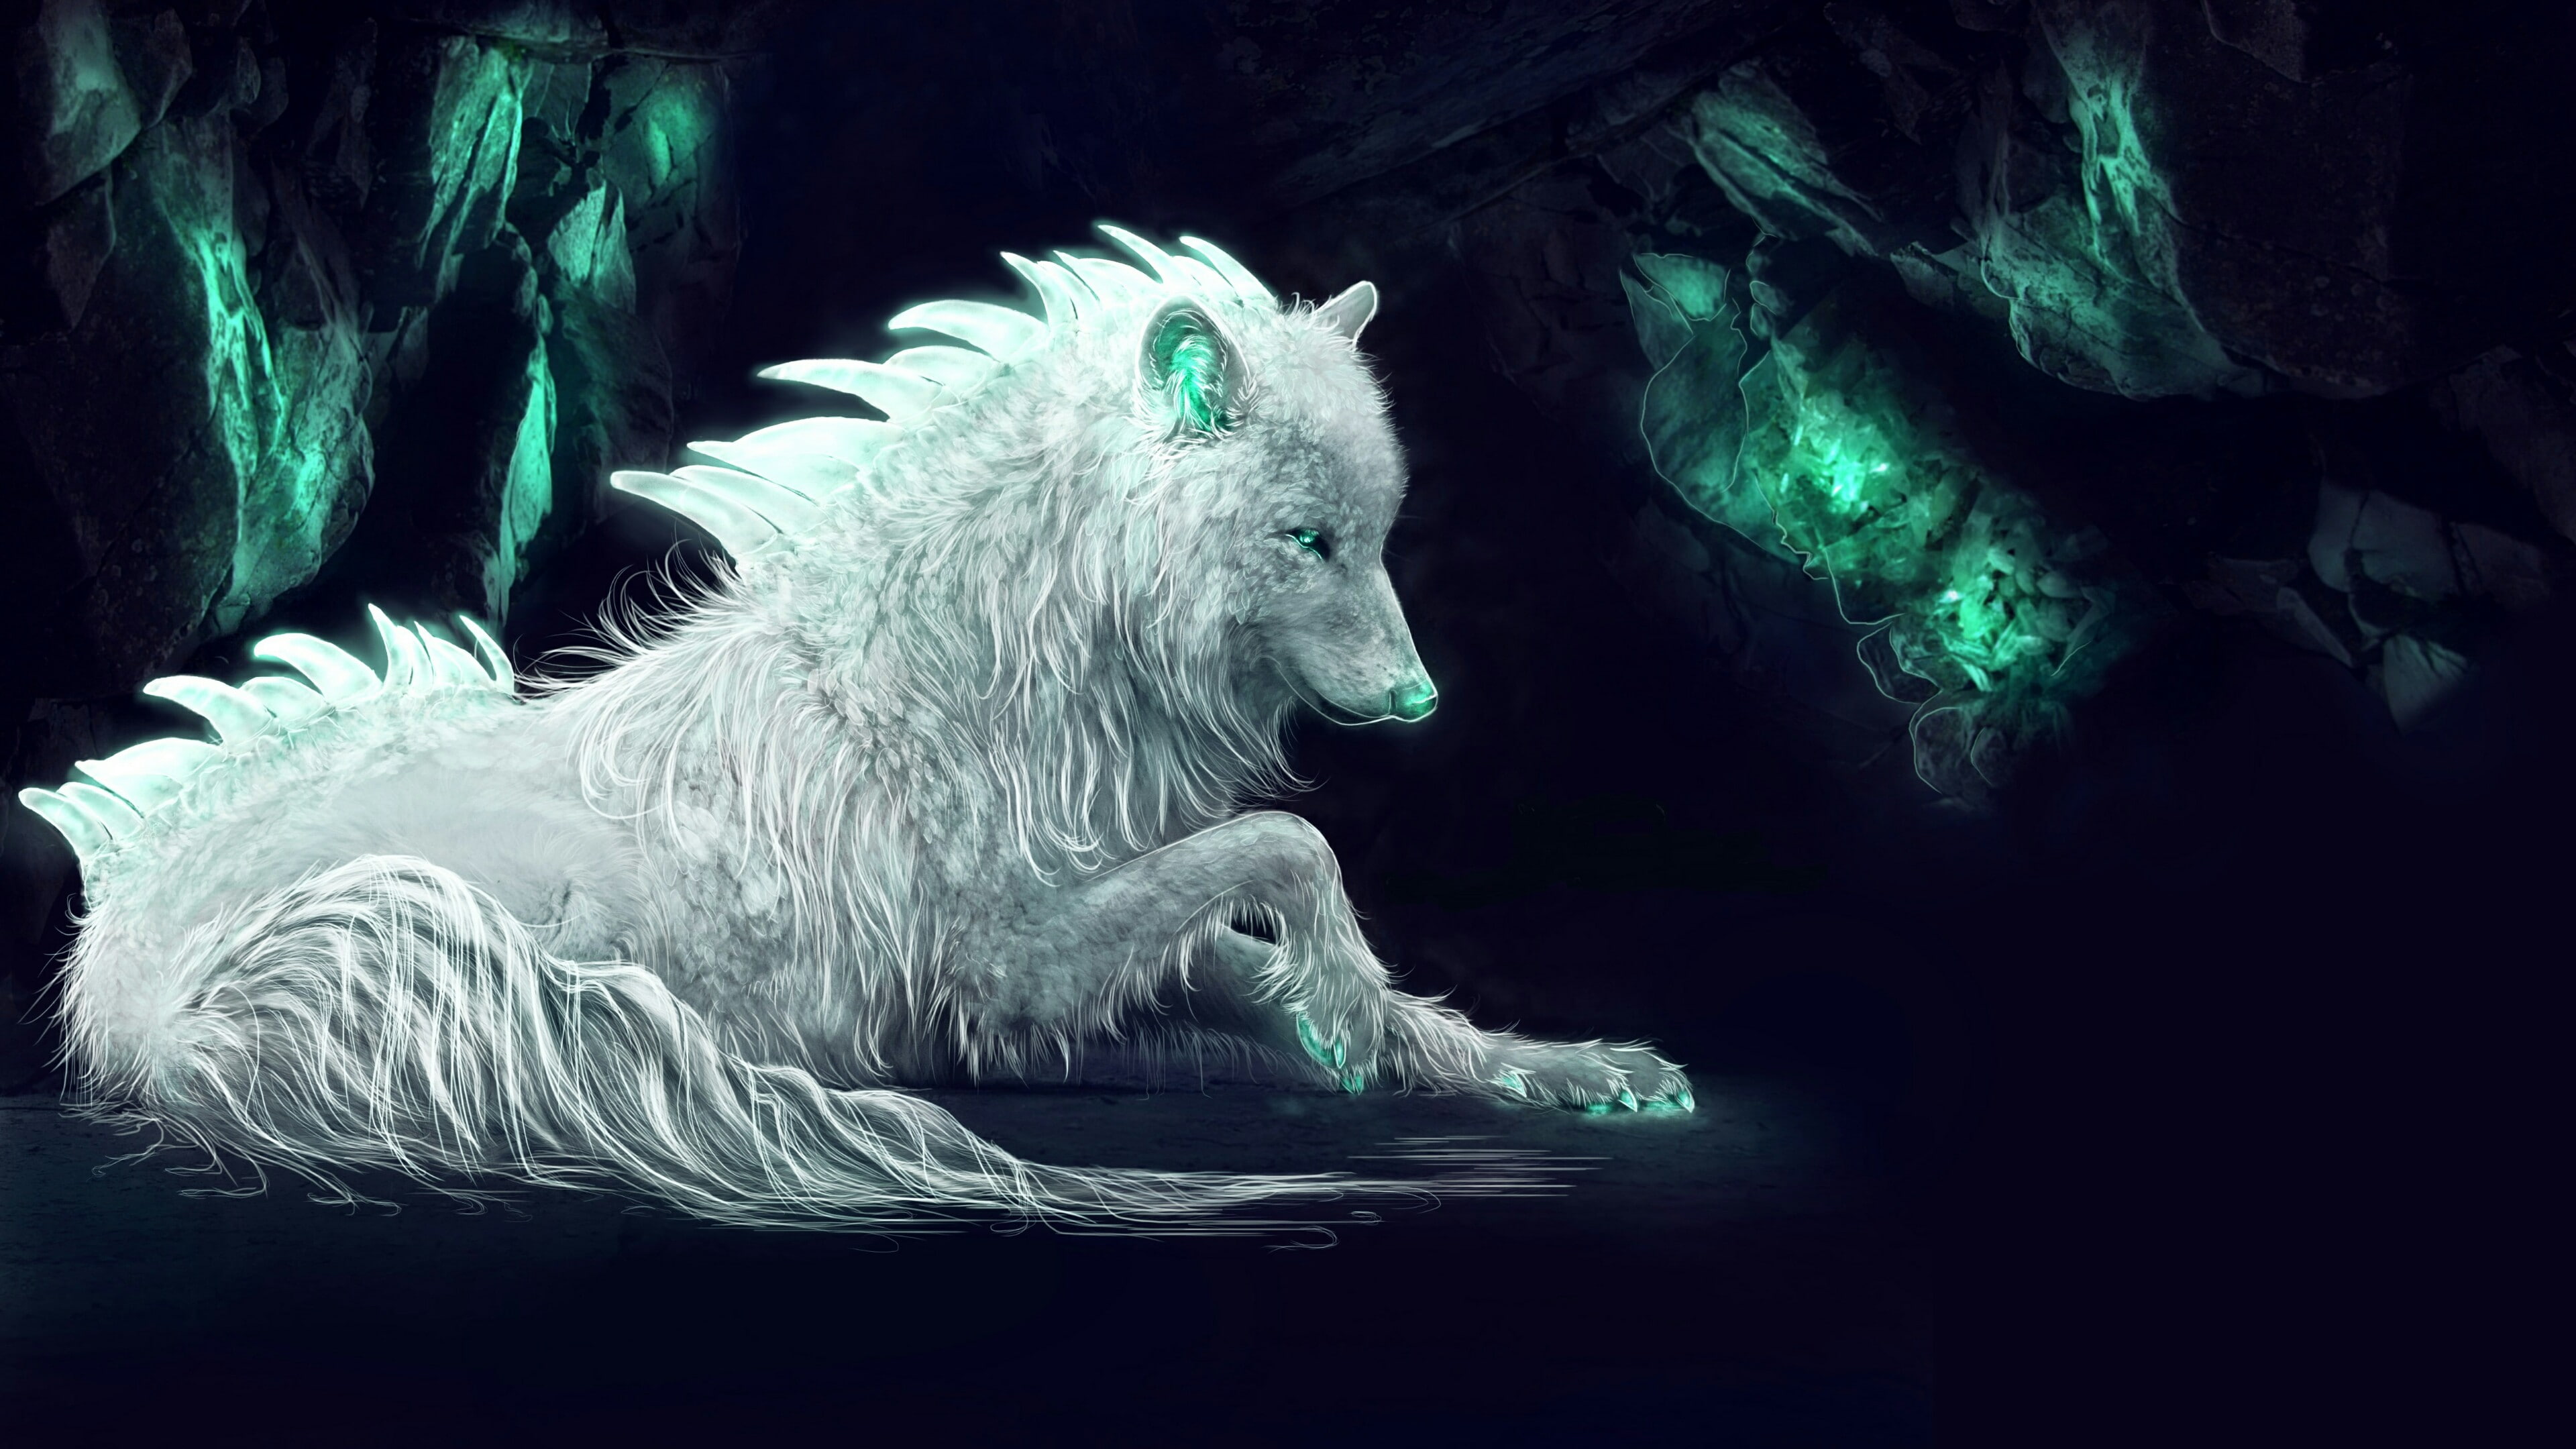 darkness, wolf, white wolf, fantasy art, imagination, mythical creature